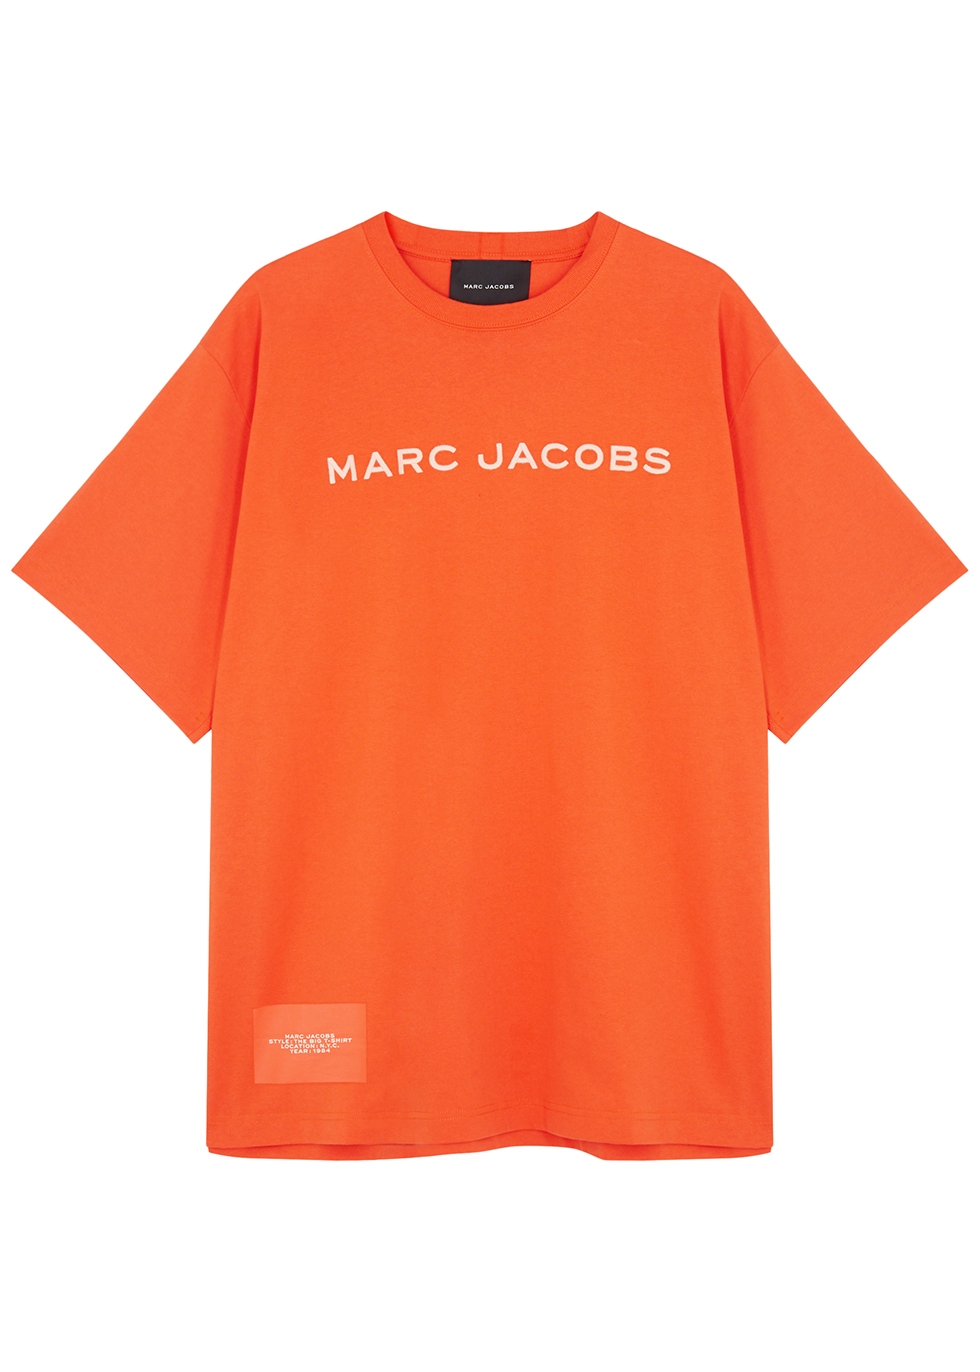 MARC JACOBS The Big T-shirt black logo cotton top